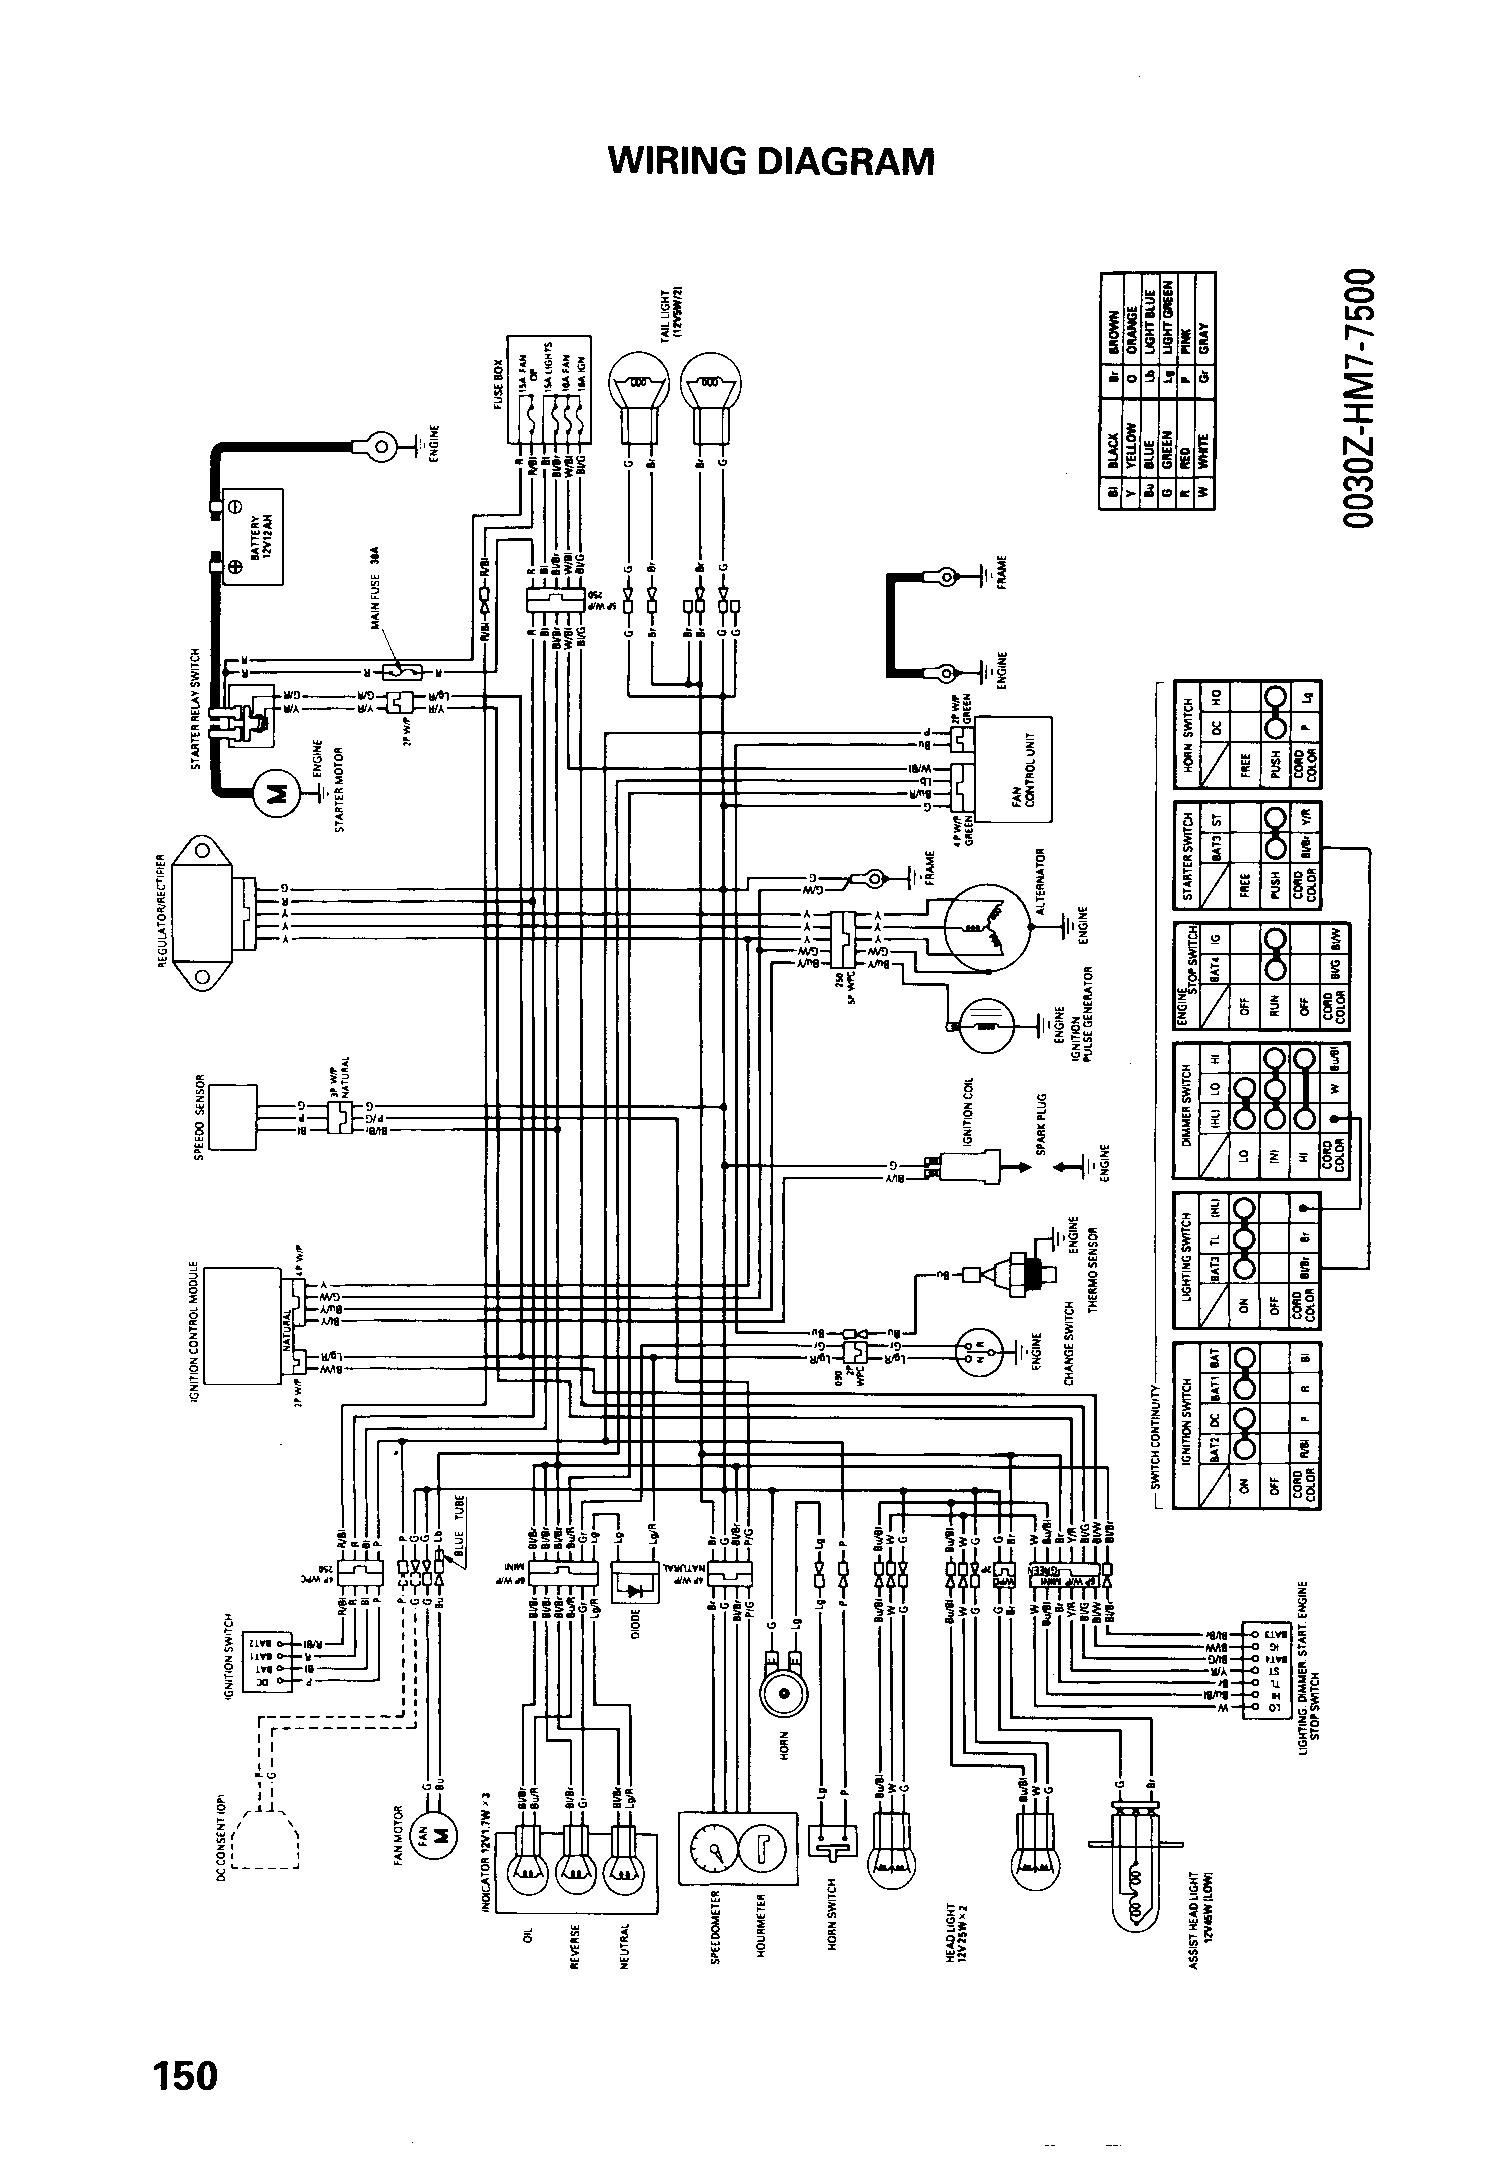 Honda atv Parts Diagram 2001 Honda Rancher 350 Wiring Diagram Of Honda atv Parts Diagram